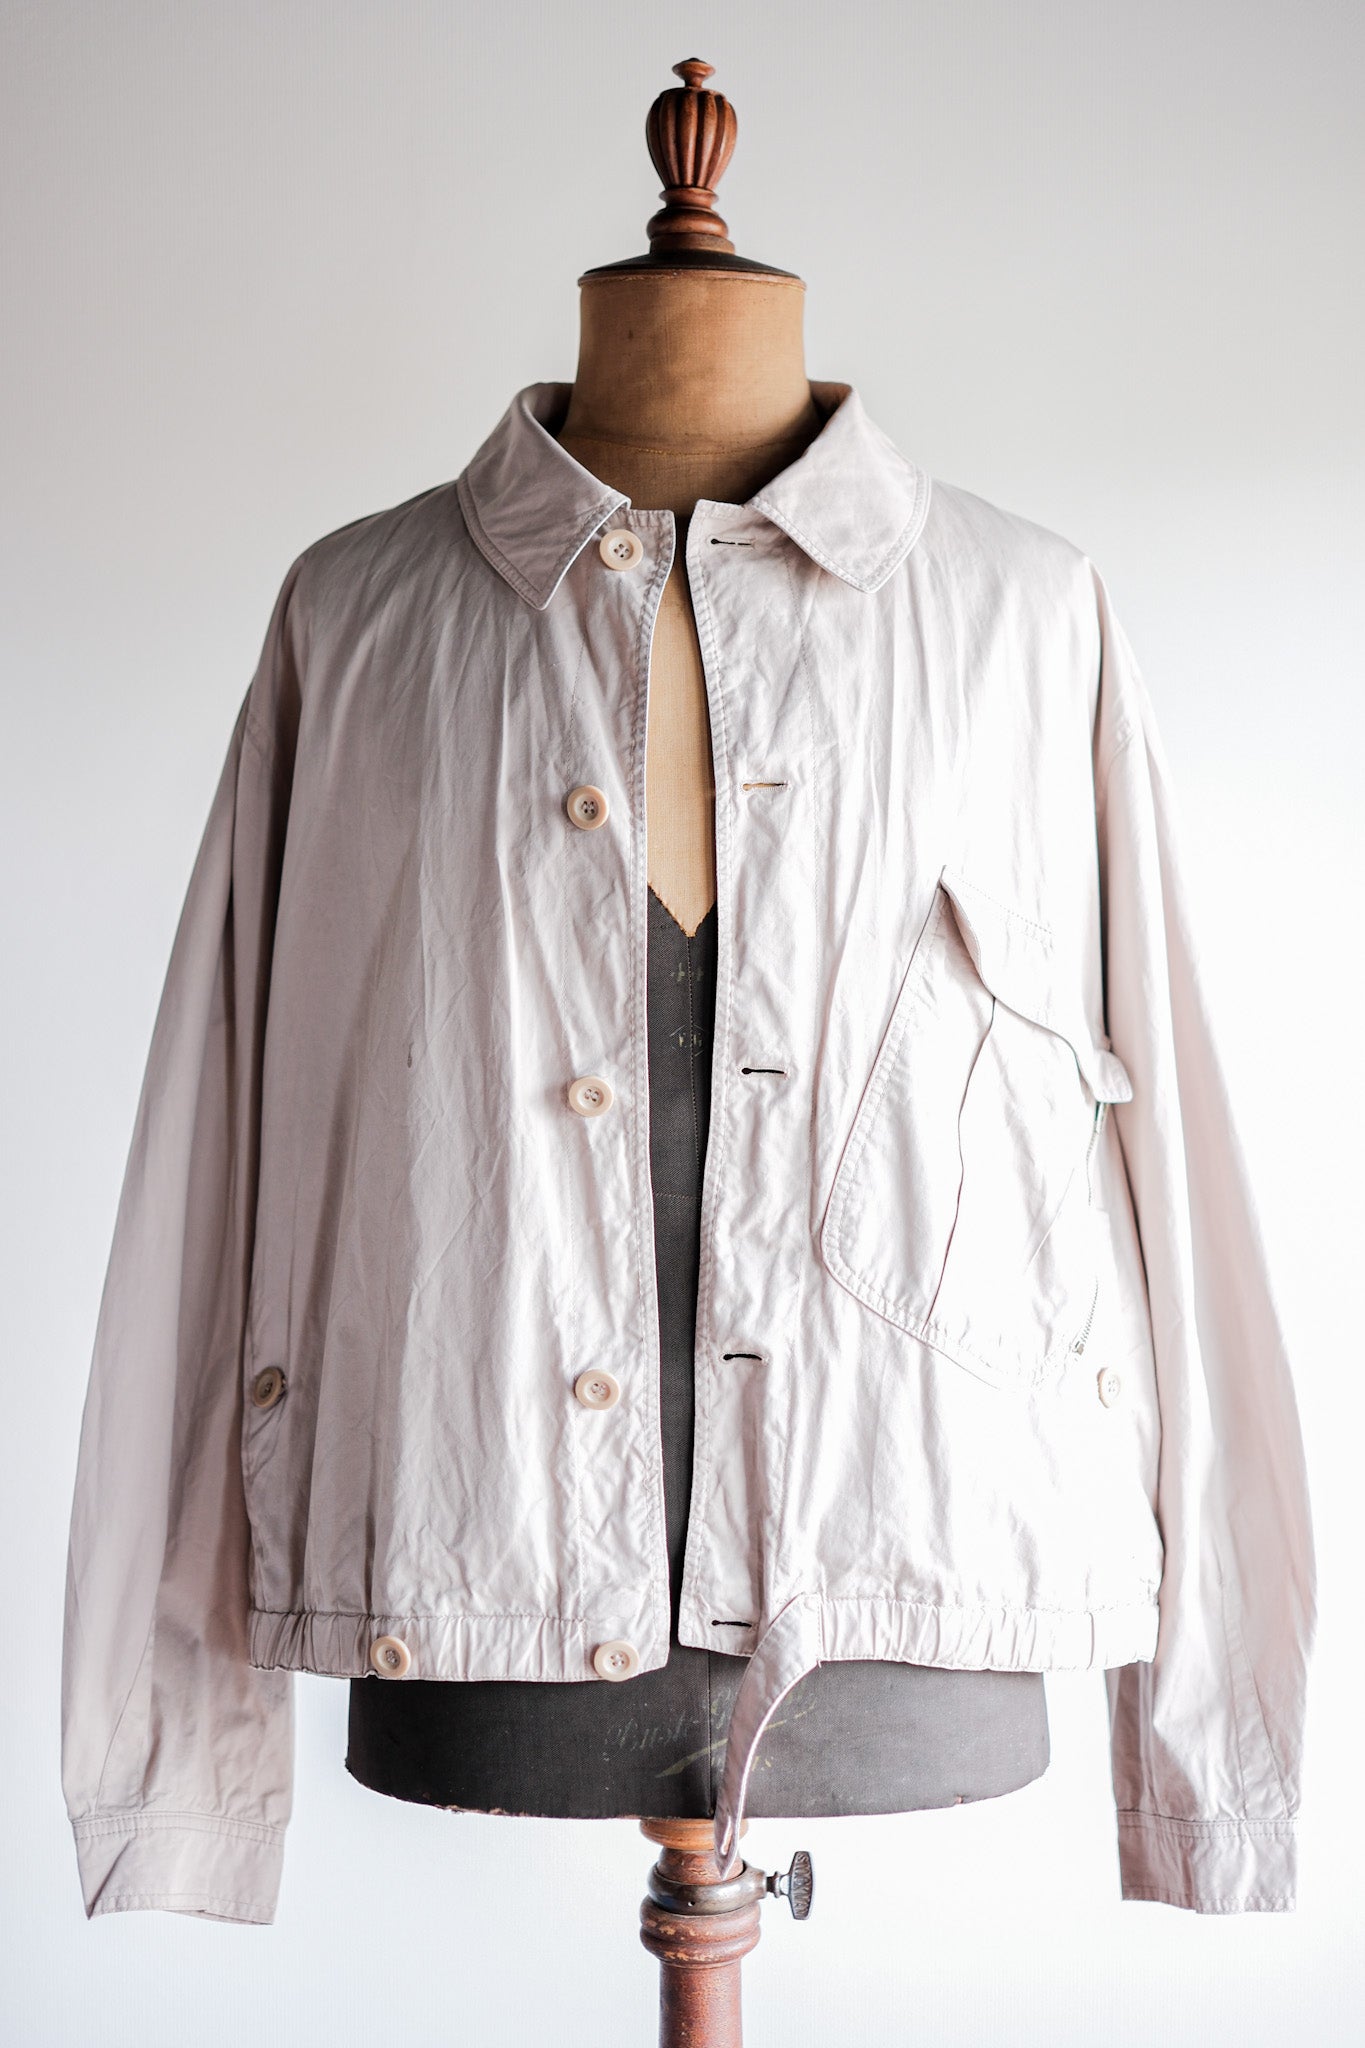 [~80 年代] 舊 GIORGIO ARMANI 棉質夾克衫